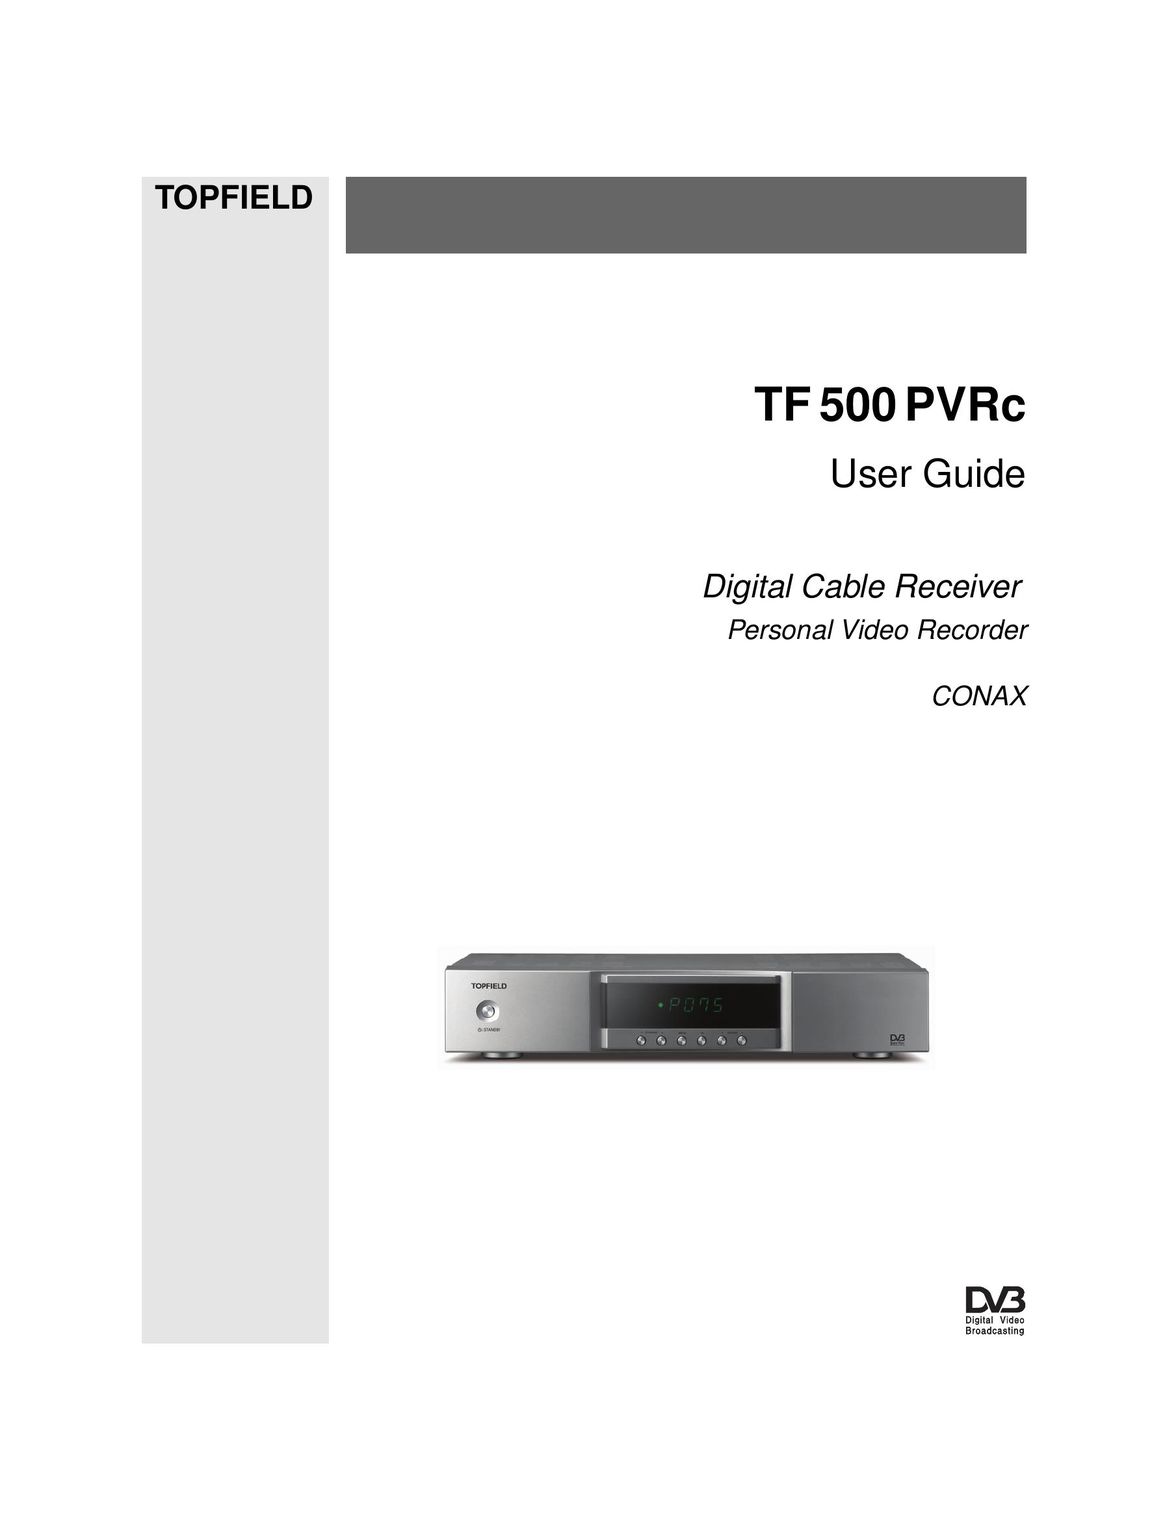 Topfield TF 500 PVRC DVR User Manual